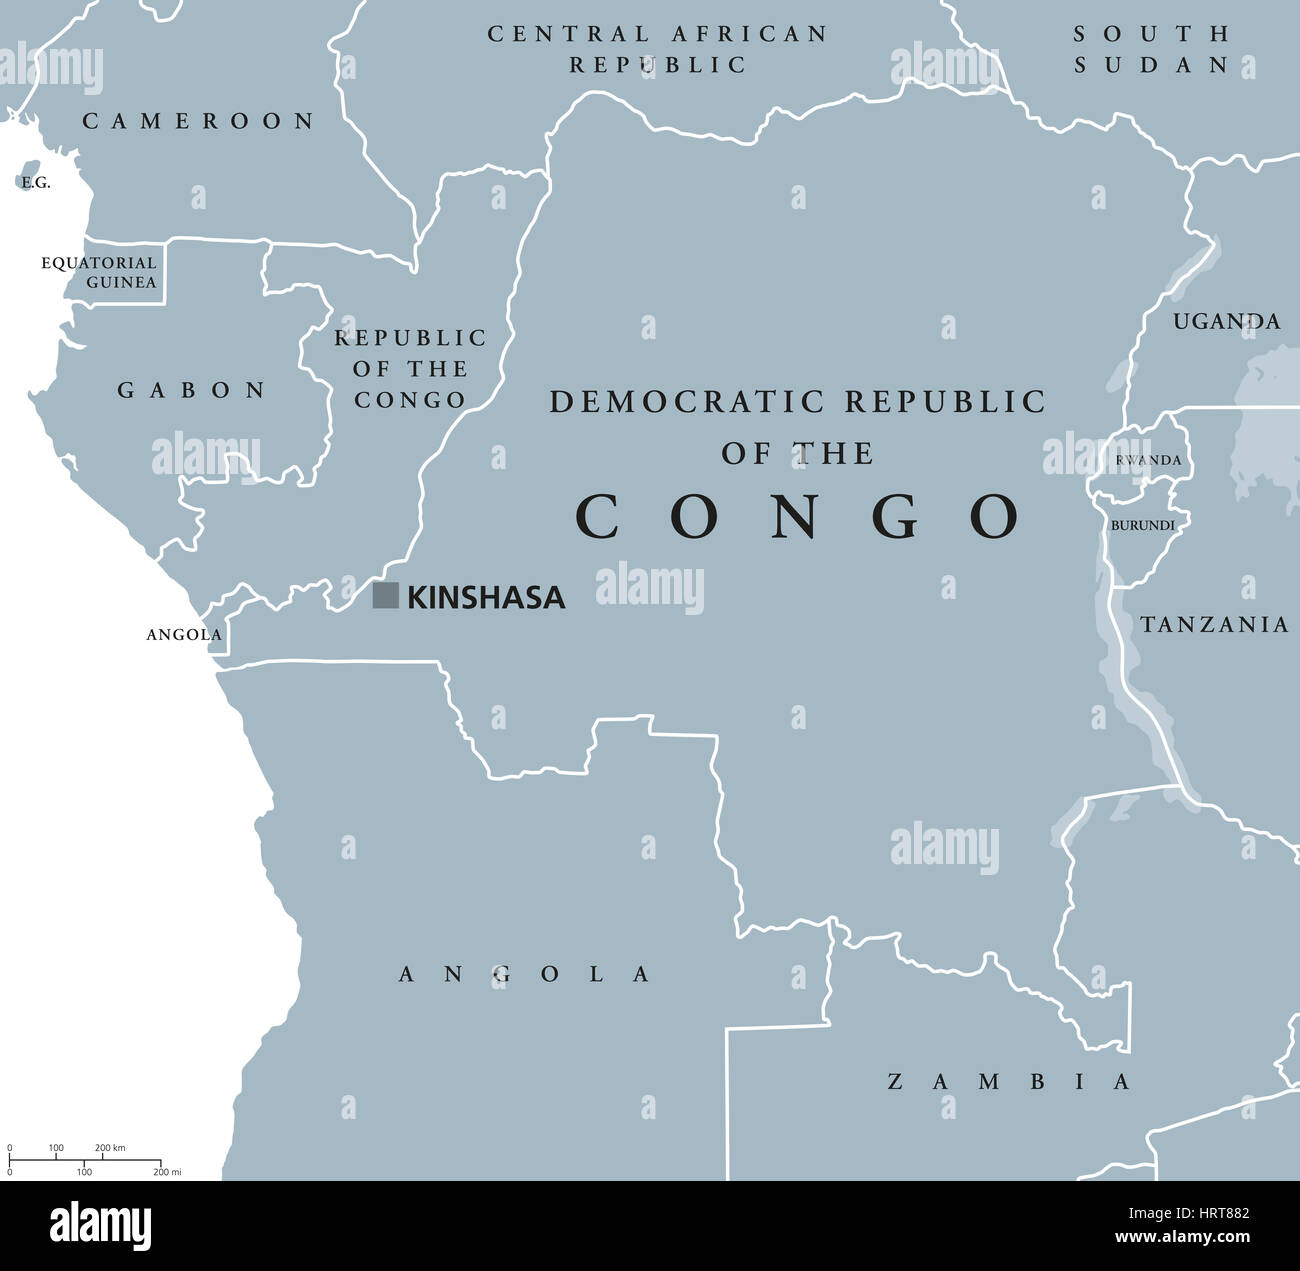 RDC Congo Congo Kinshasa Drapeau Carte de l'Afrique' T-shirt Femme